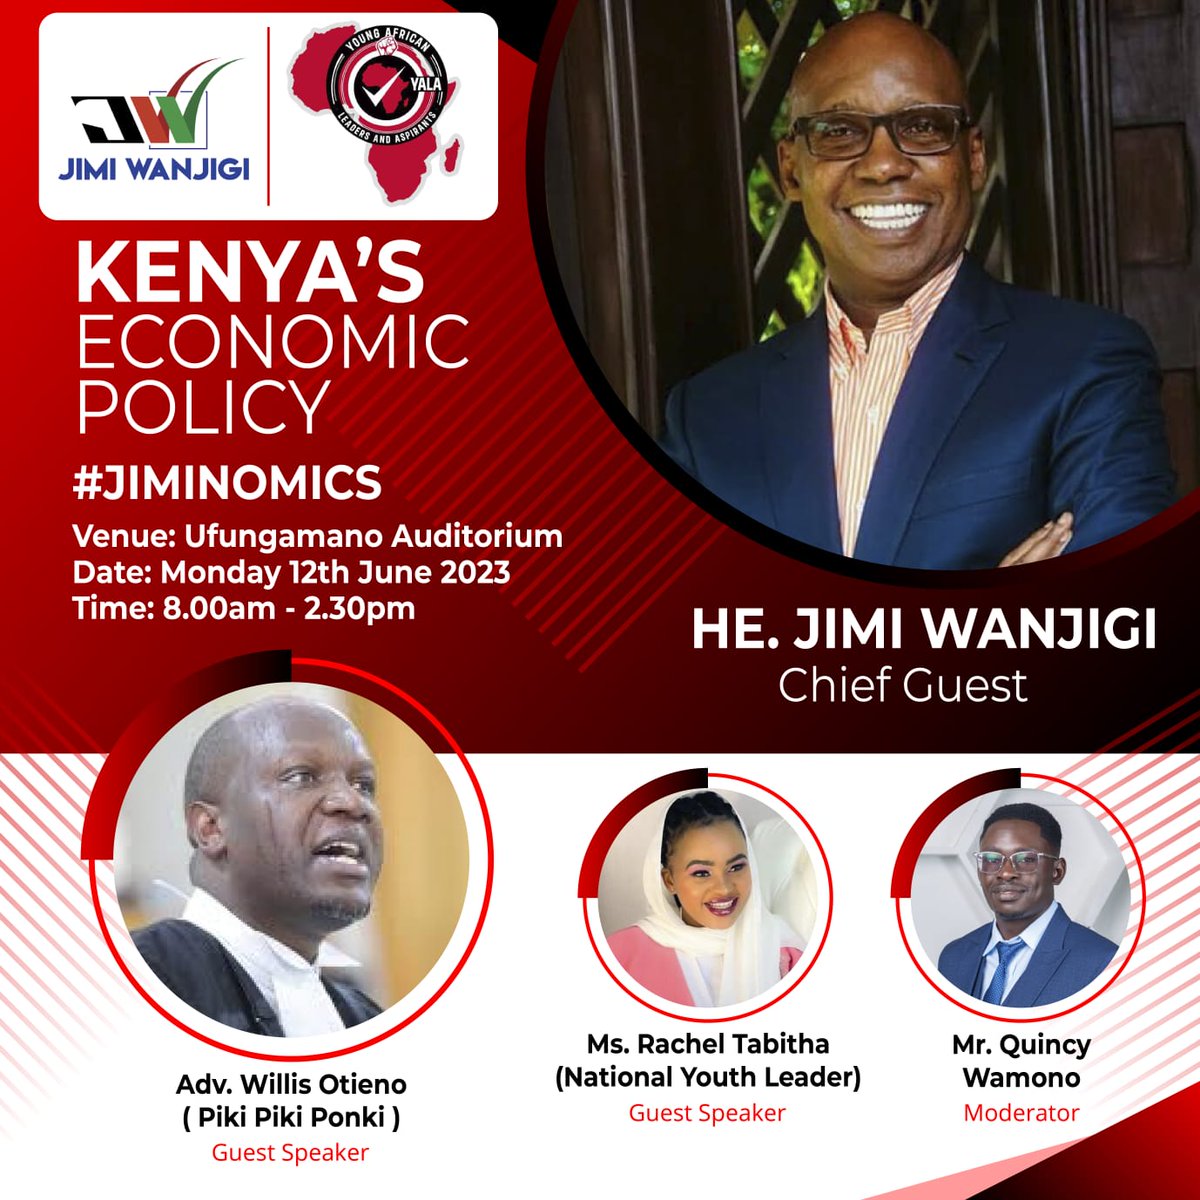 It's time we discuss the Kenya's economic policy. Today Jimi Wanjigi is the chief guest at Ufungamano Auditorium to start this discussion.
#Jiminomics
@JimiWanjigi @willisotieno @HERachelTabitha